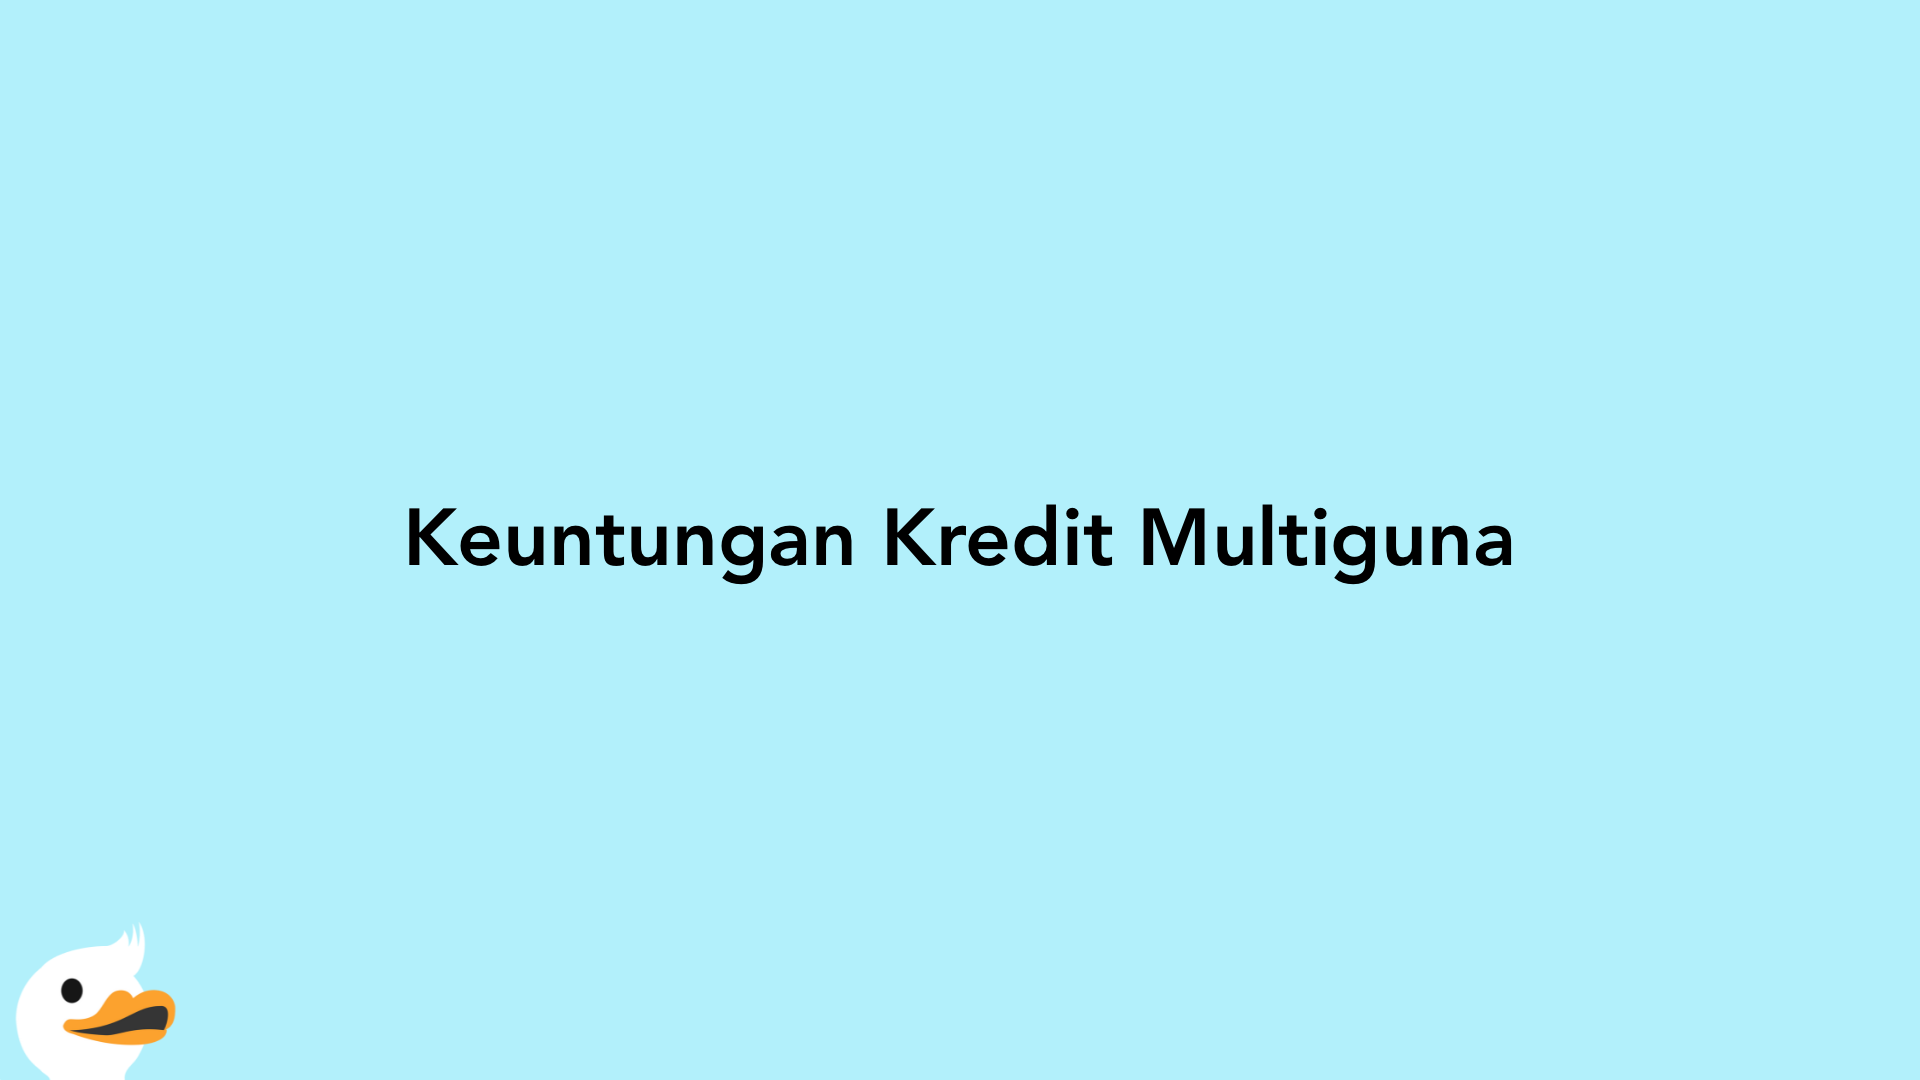 Keuntungan Kredit Multiguna